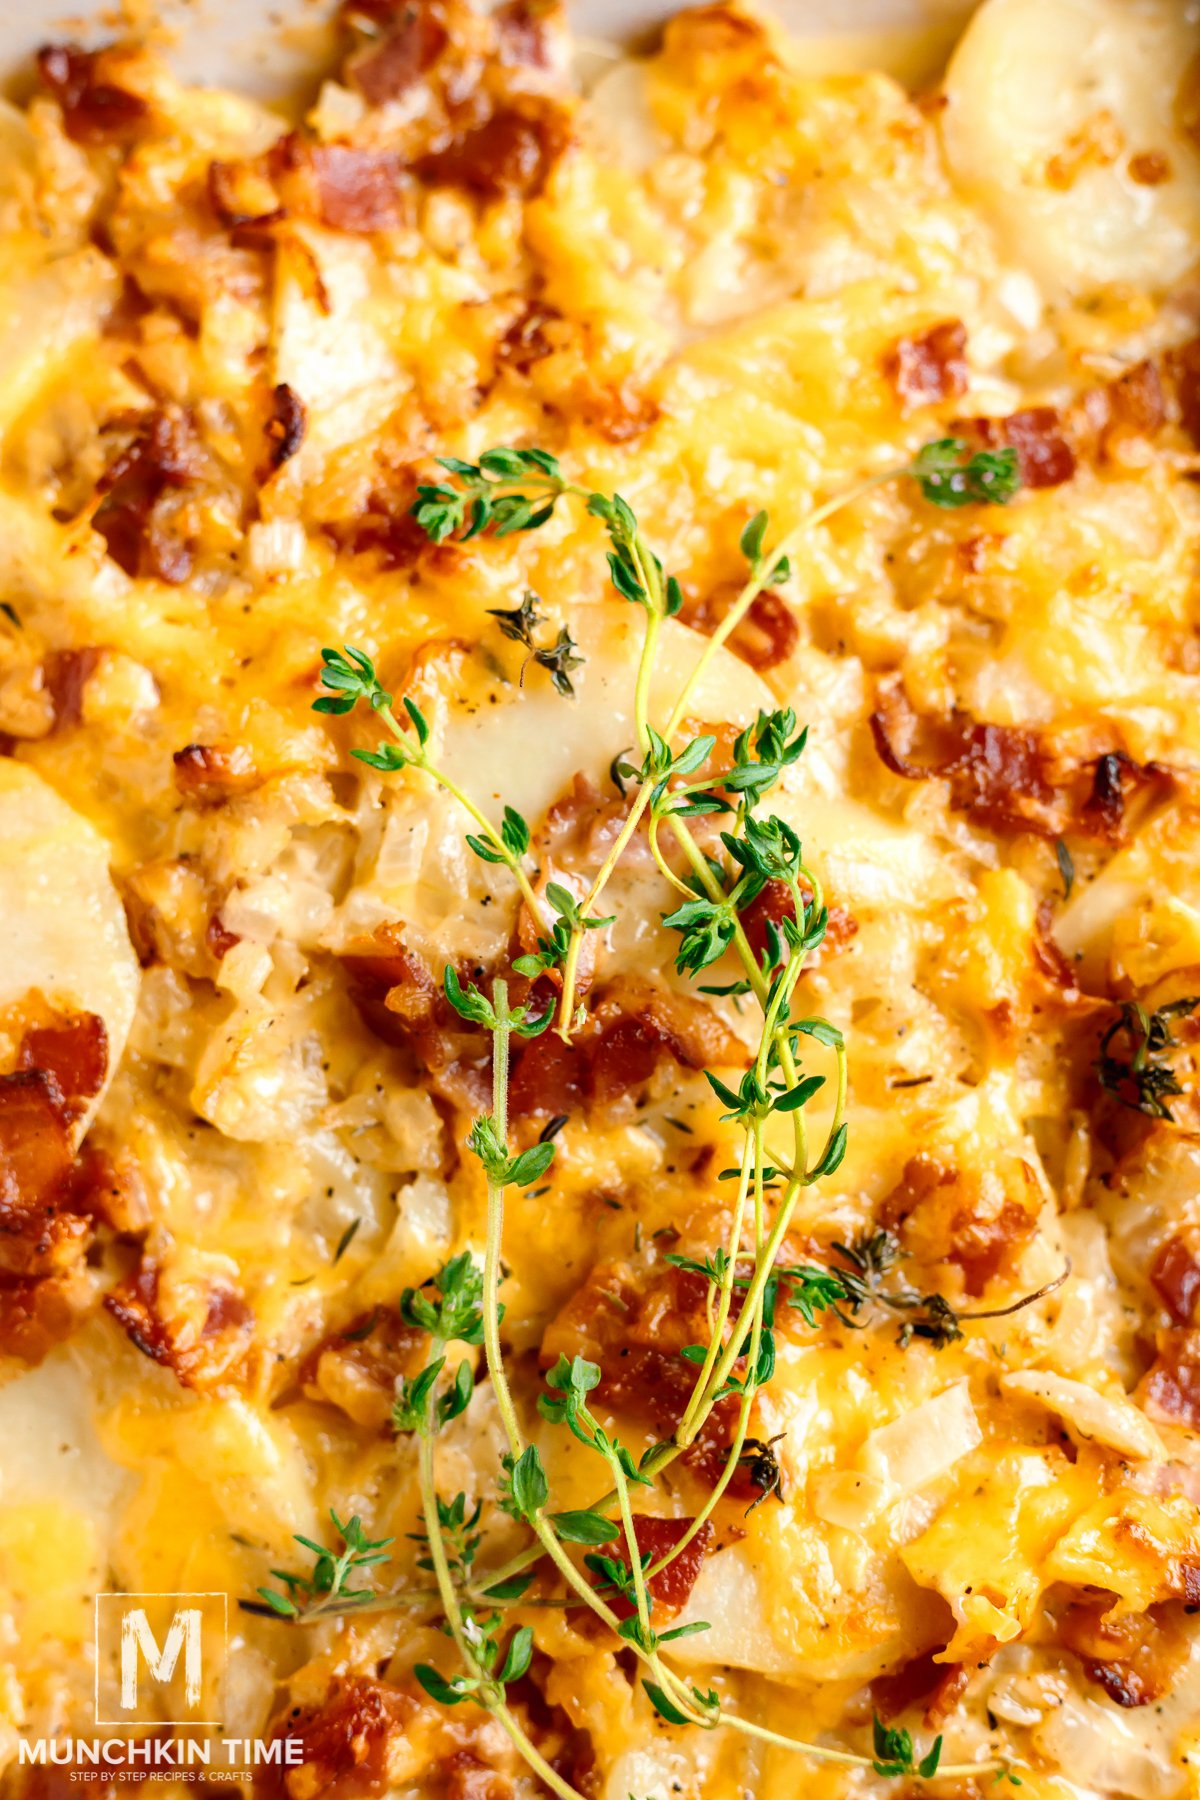 How to Make Chicken Potato Casserole